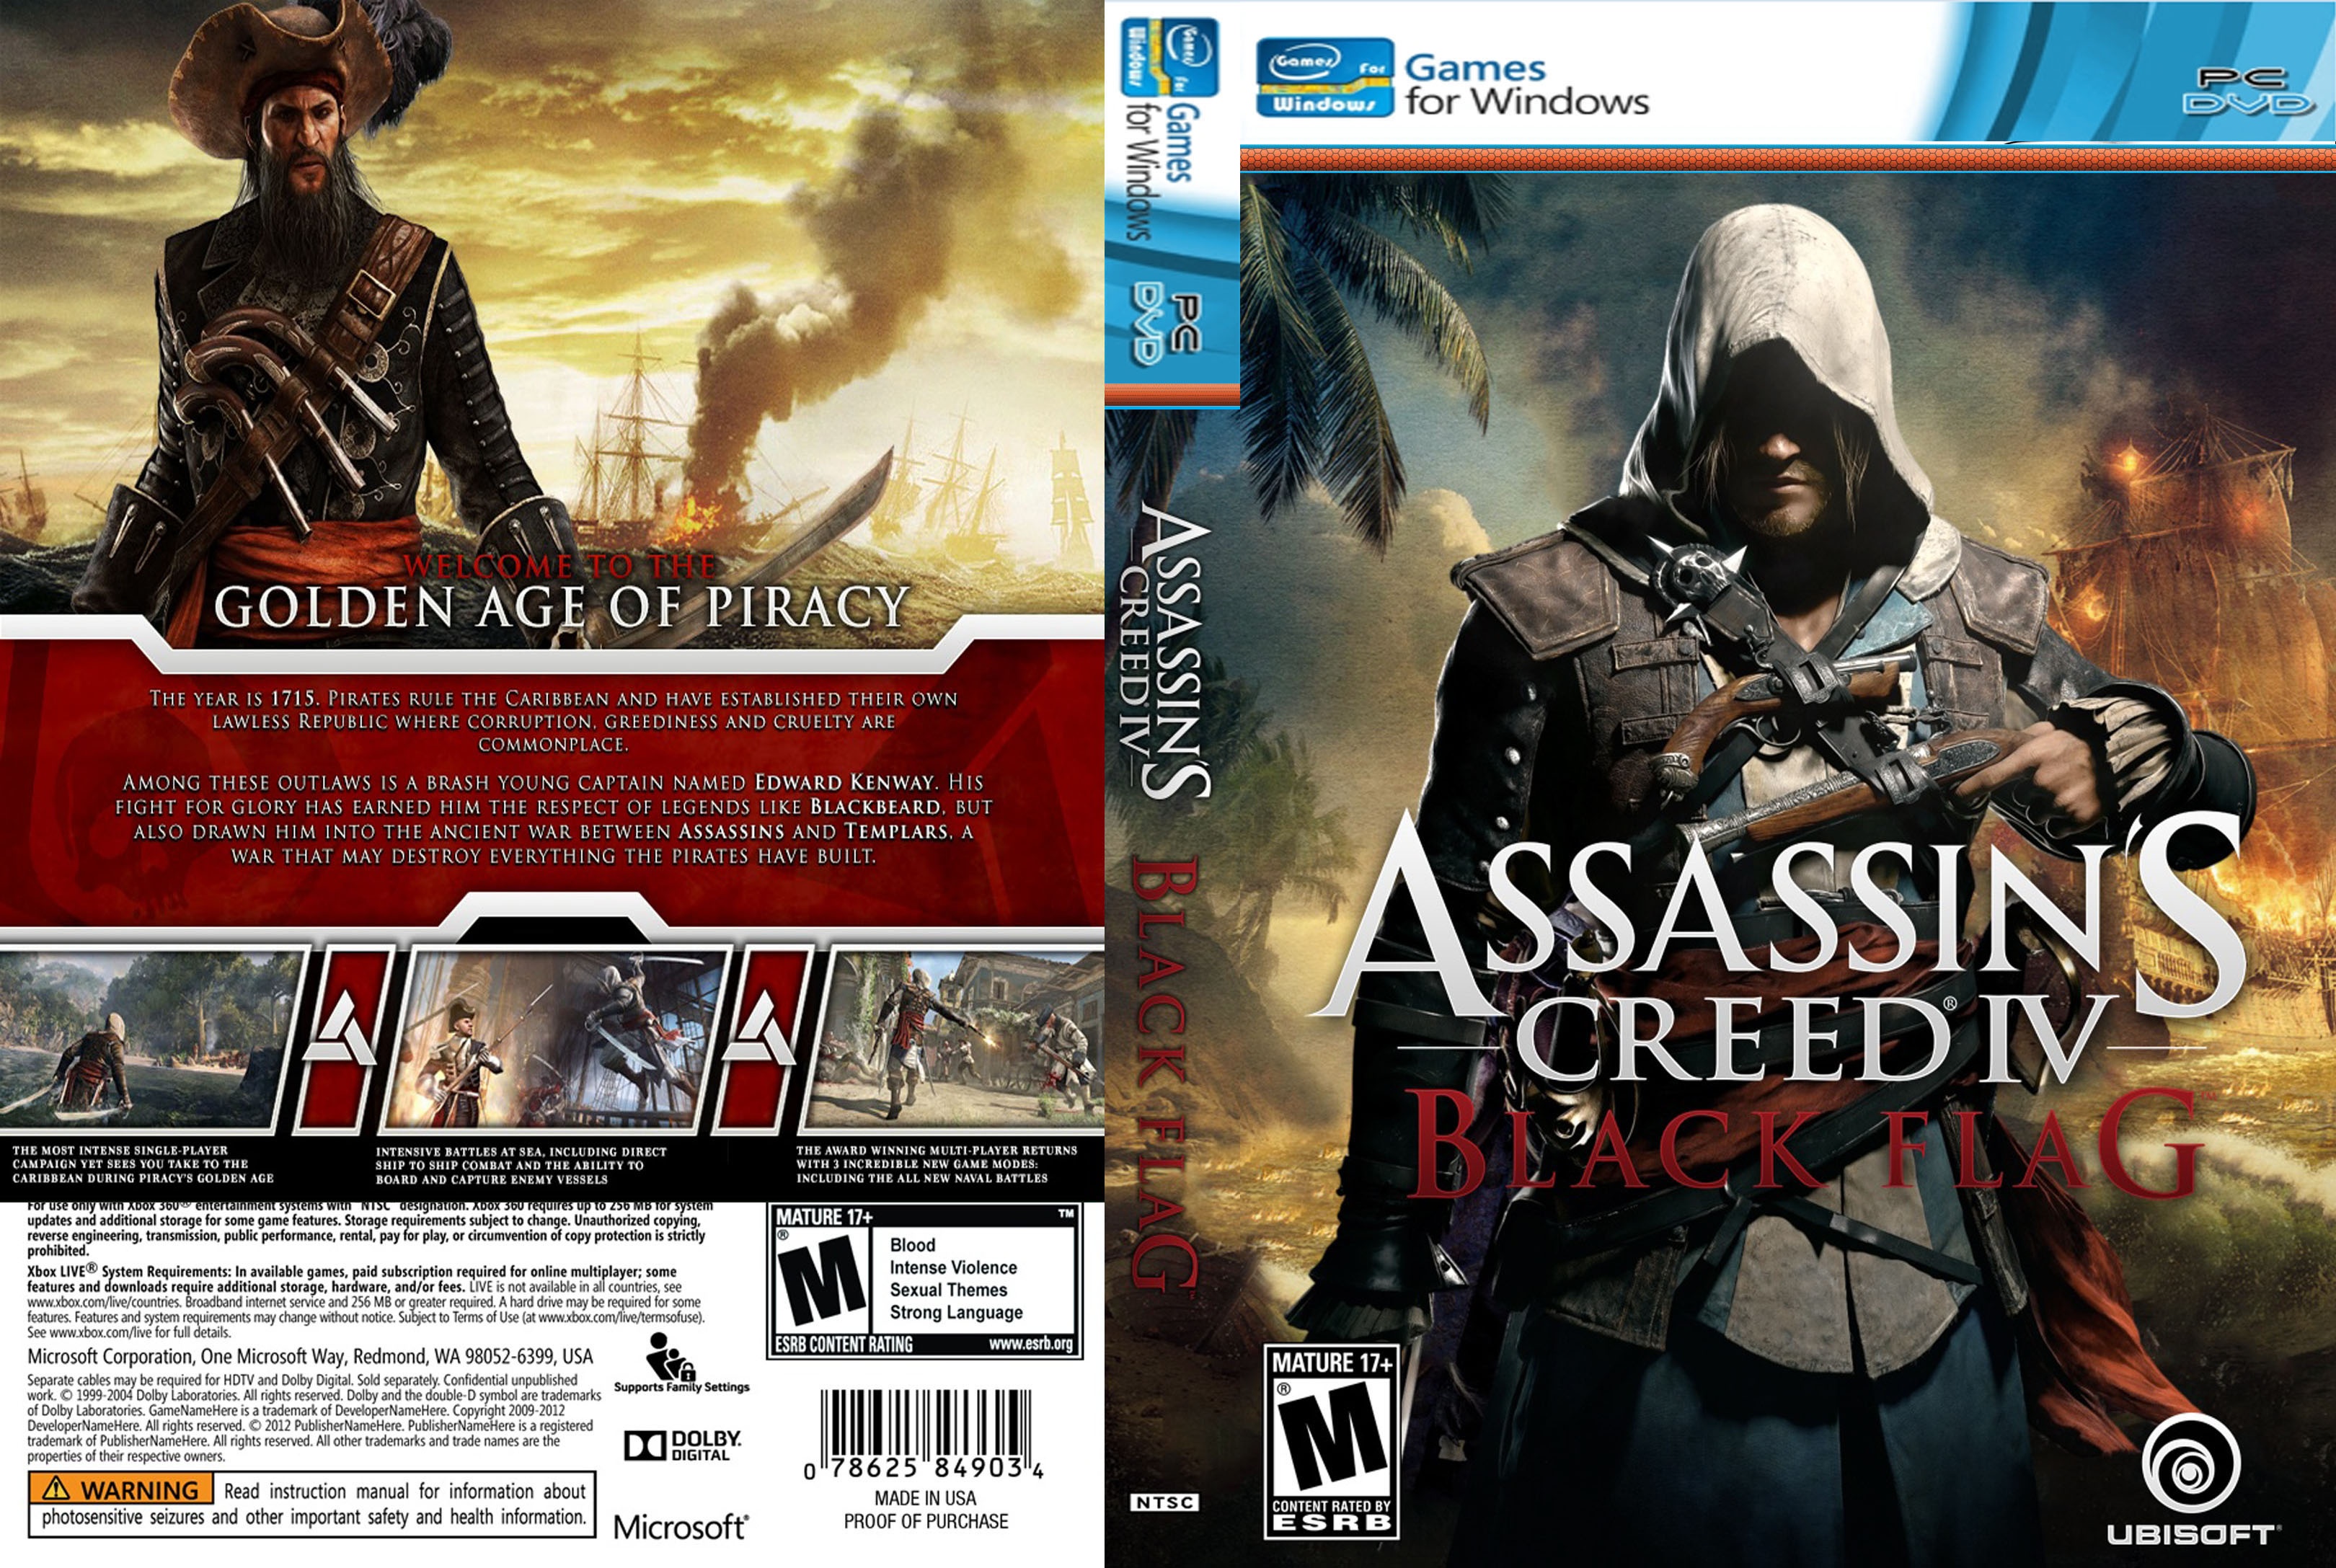 Assassin s коды. Assassins Creed ps3 обложка. Assassin's Creed Black Flag диск. Ассасин Крид чёрный флаг, на ПС 3 диск. Assassins Creed IV черный флаг [ps3, русская версия].